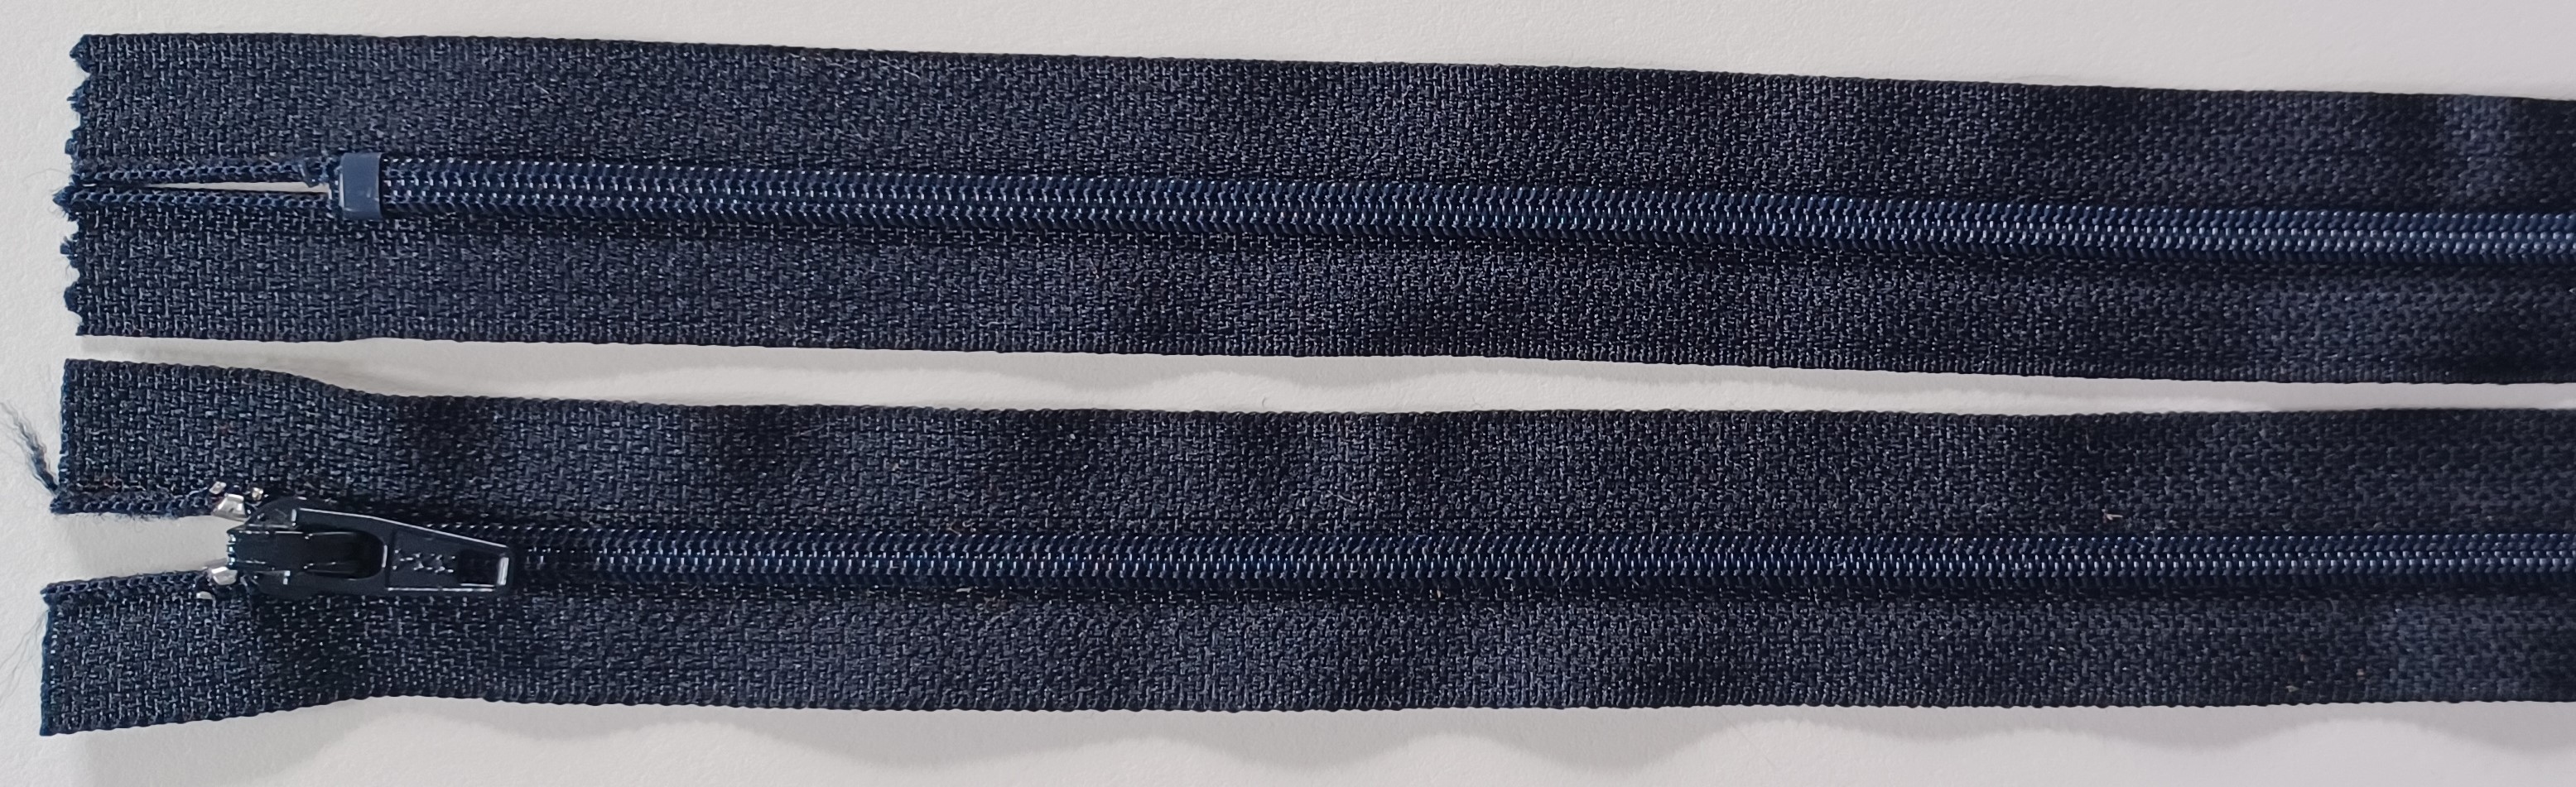 YKK 7.5" Dark Navy Nylon Coil Zipper